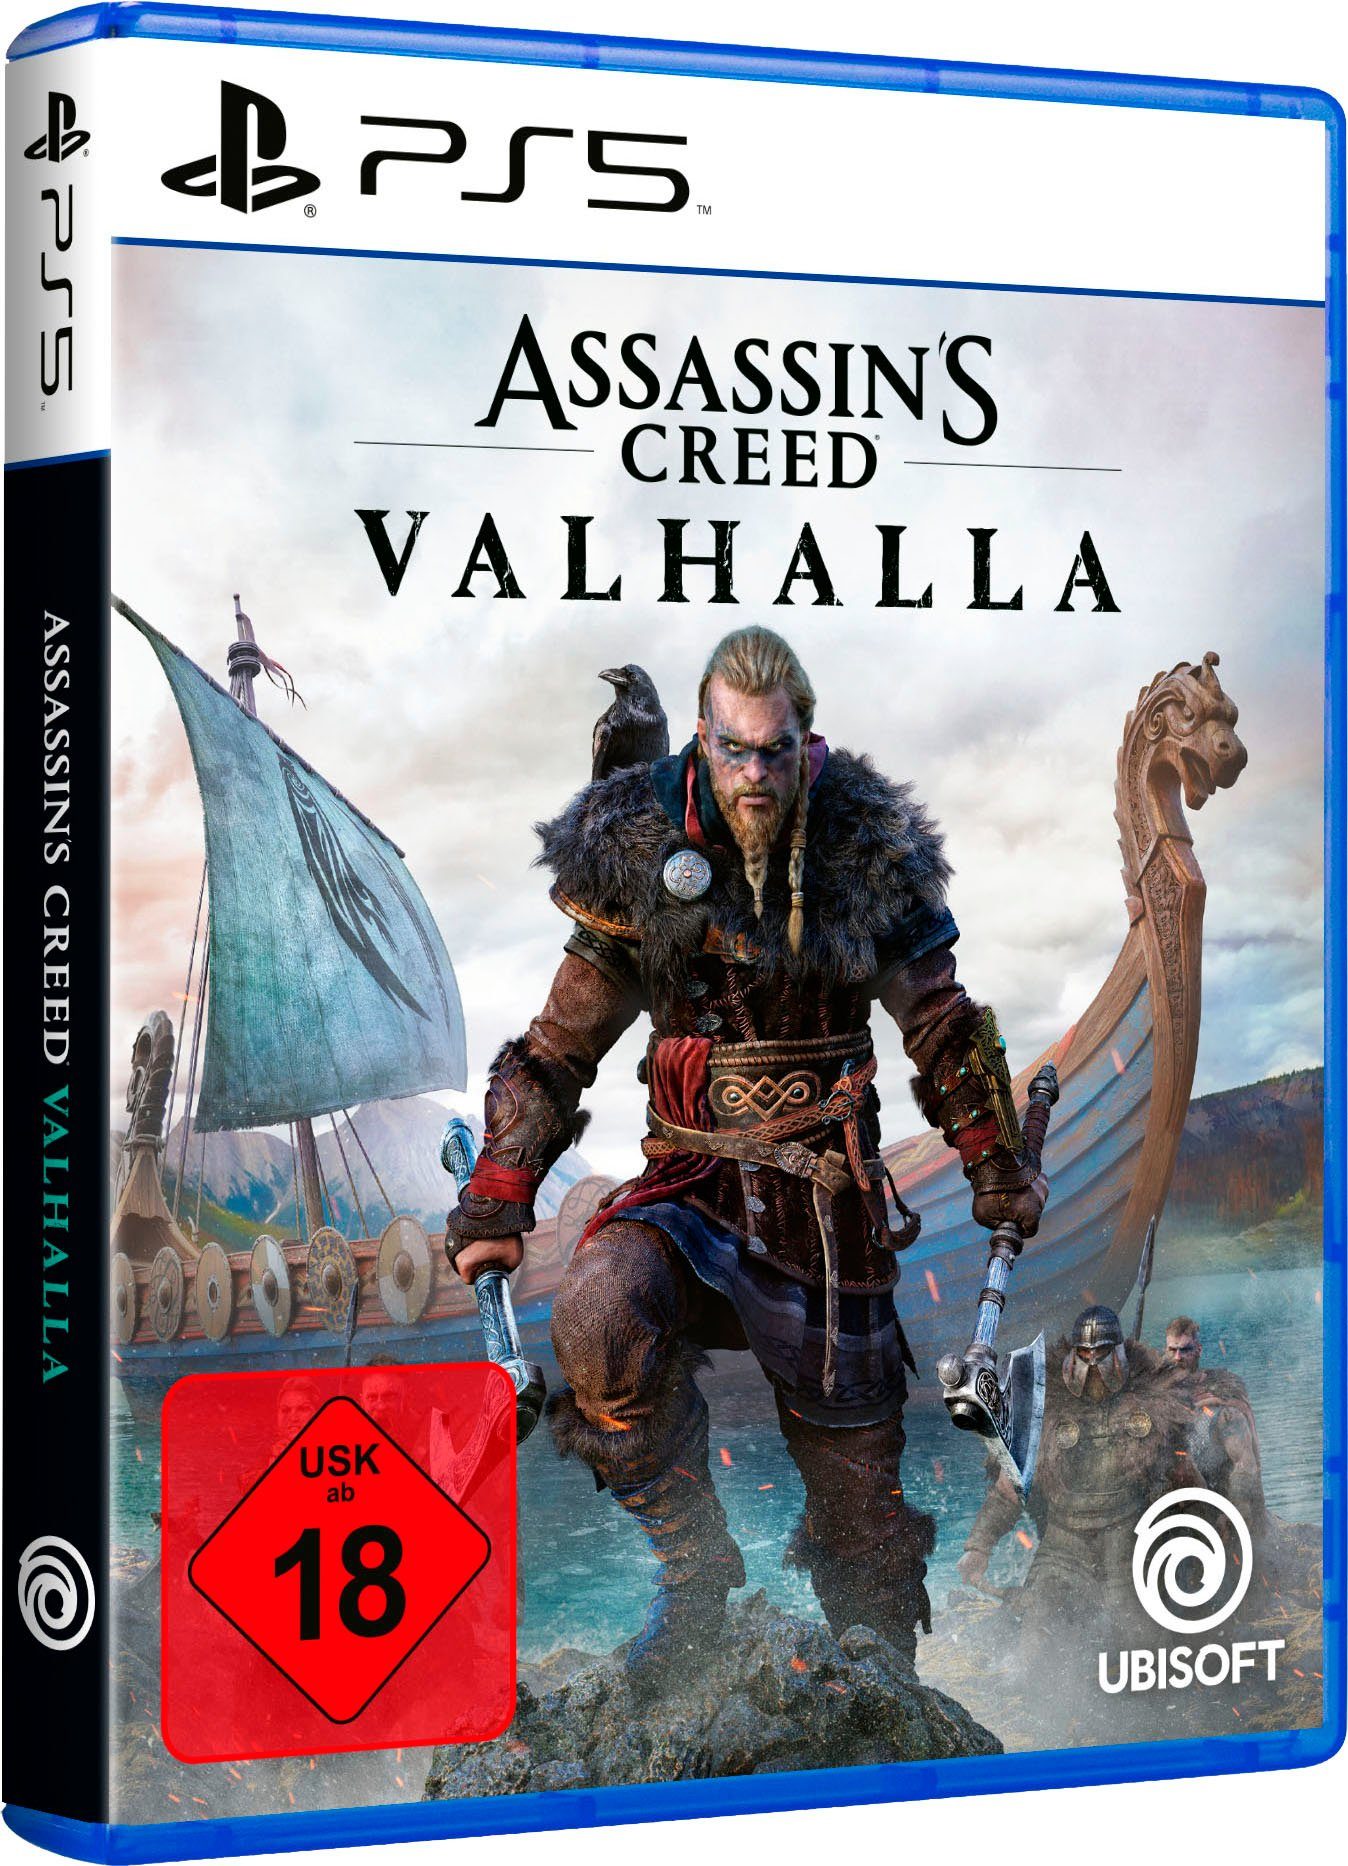 UBISOFT 5 Valhalla PlayStation Assassin's Creed